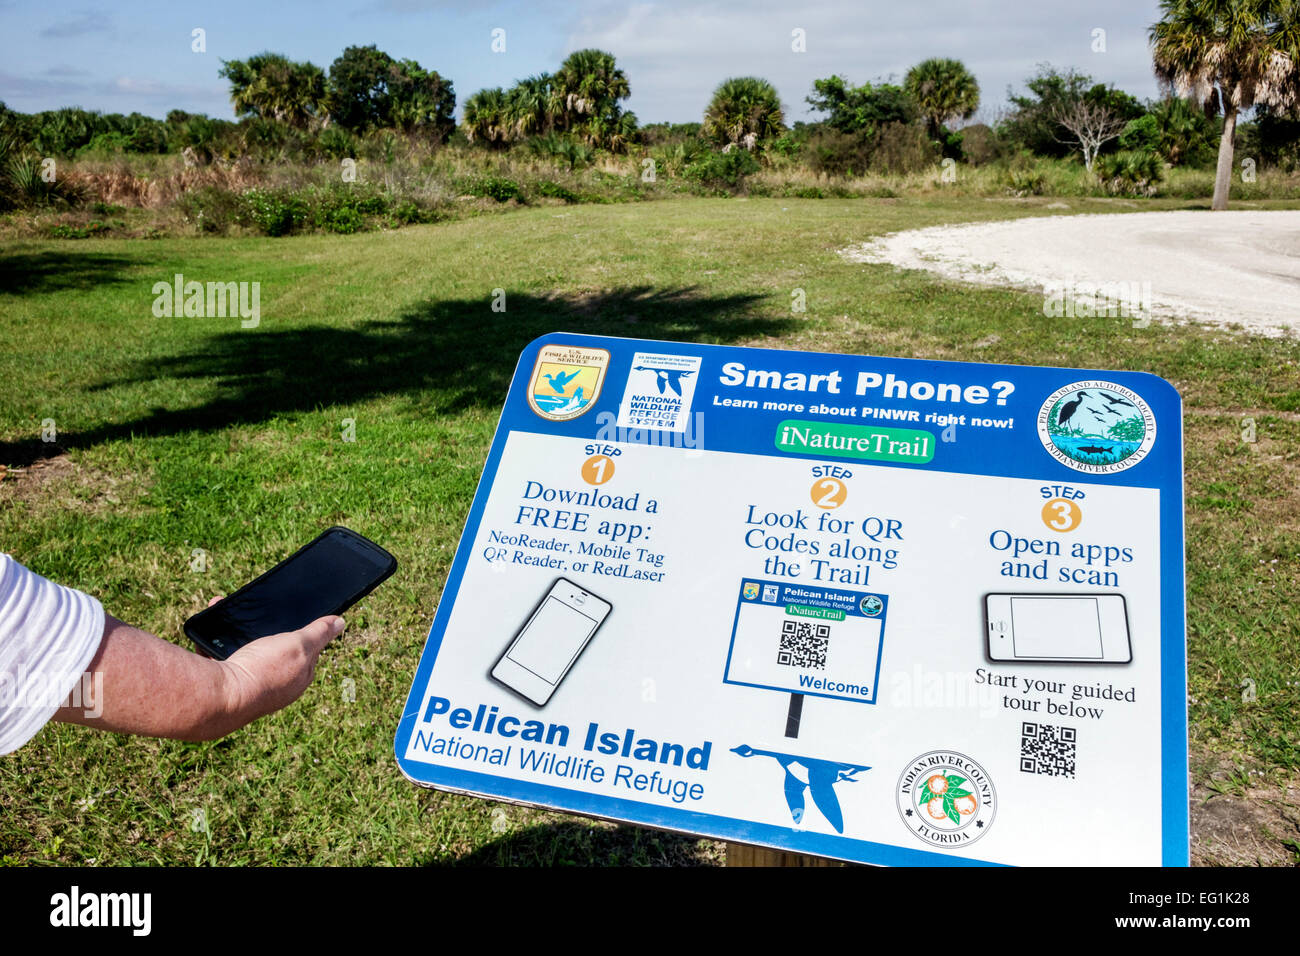 Sebastian Florida, North Hutchinson Orchid Island, Pelican Island National Wildlife Refuge, Smartphone-Smartphones Handy-Smartphones SMS Stockfoto